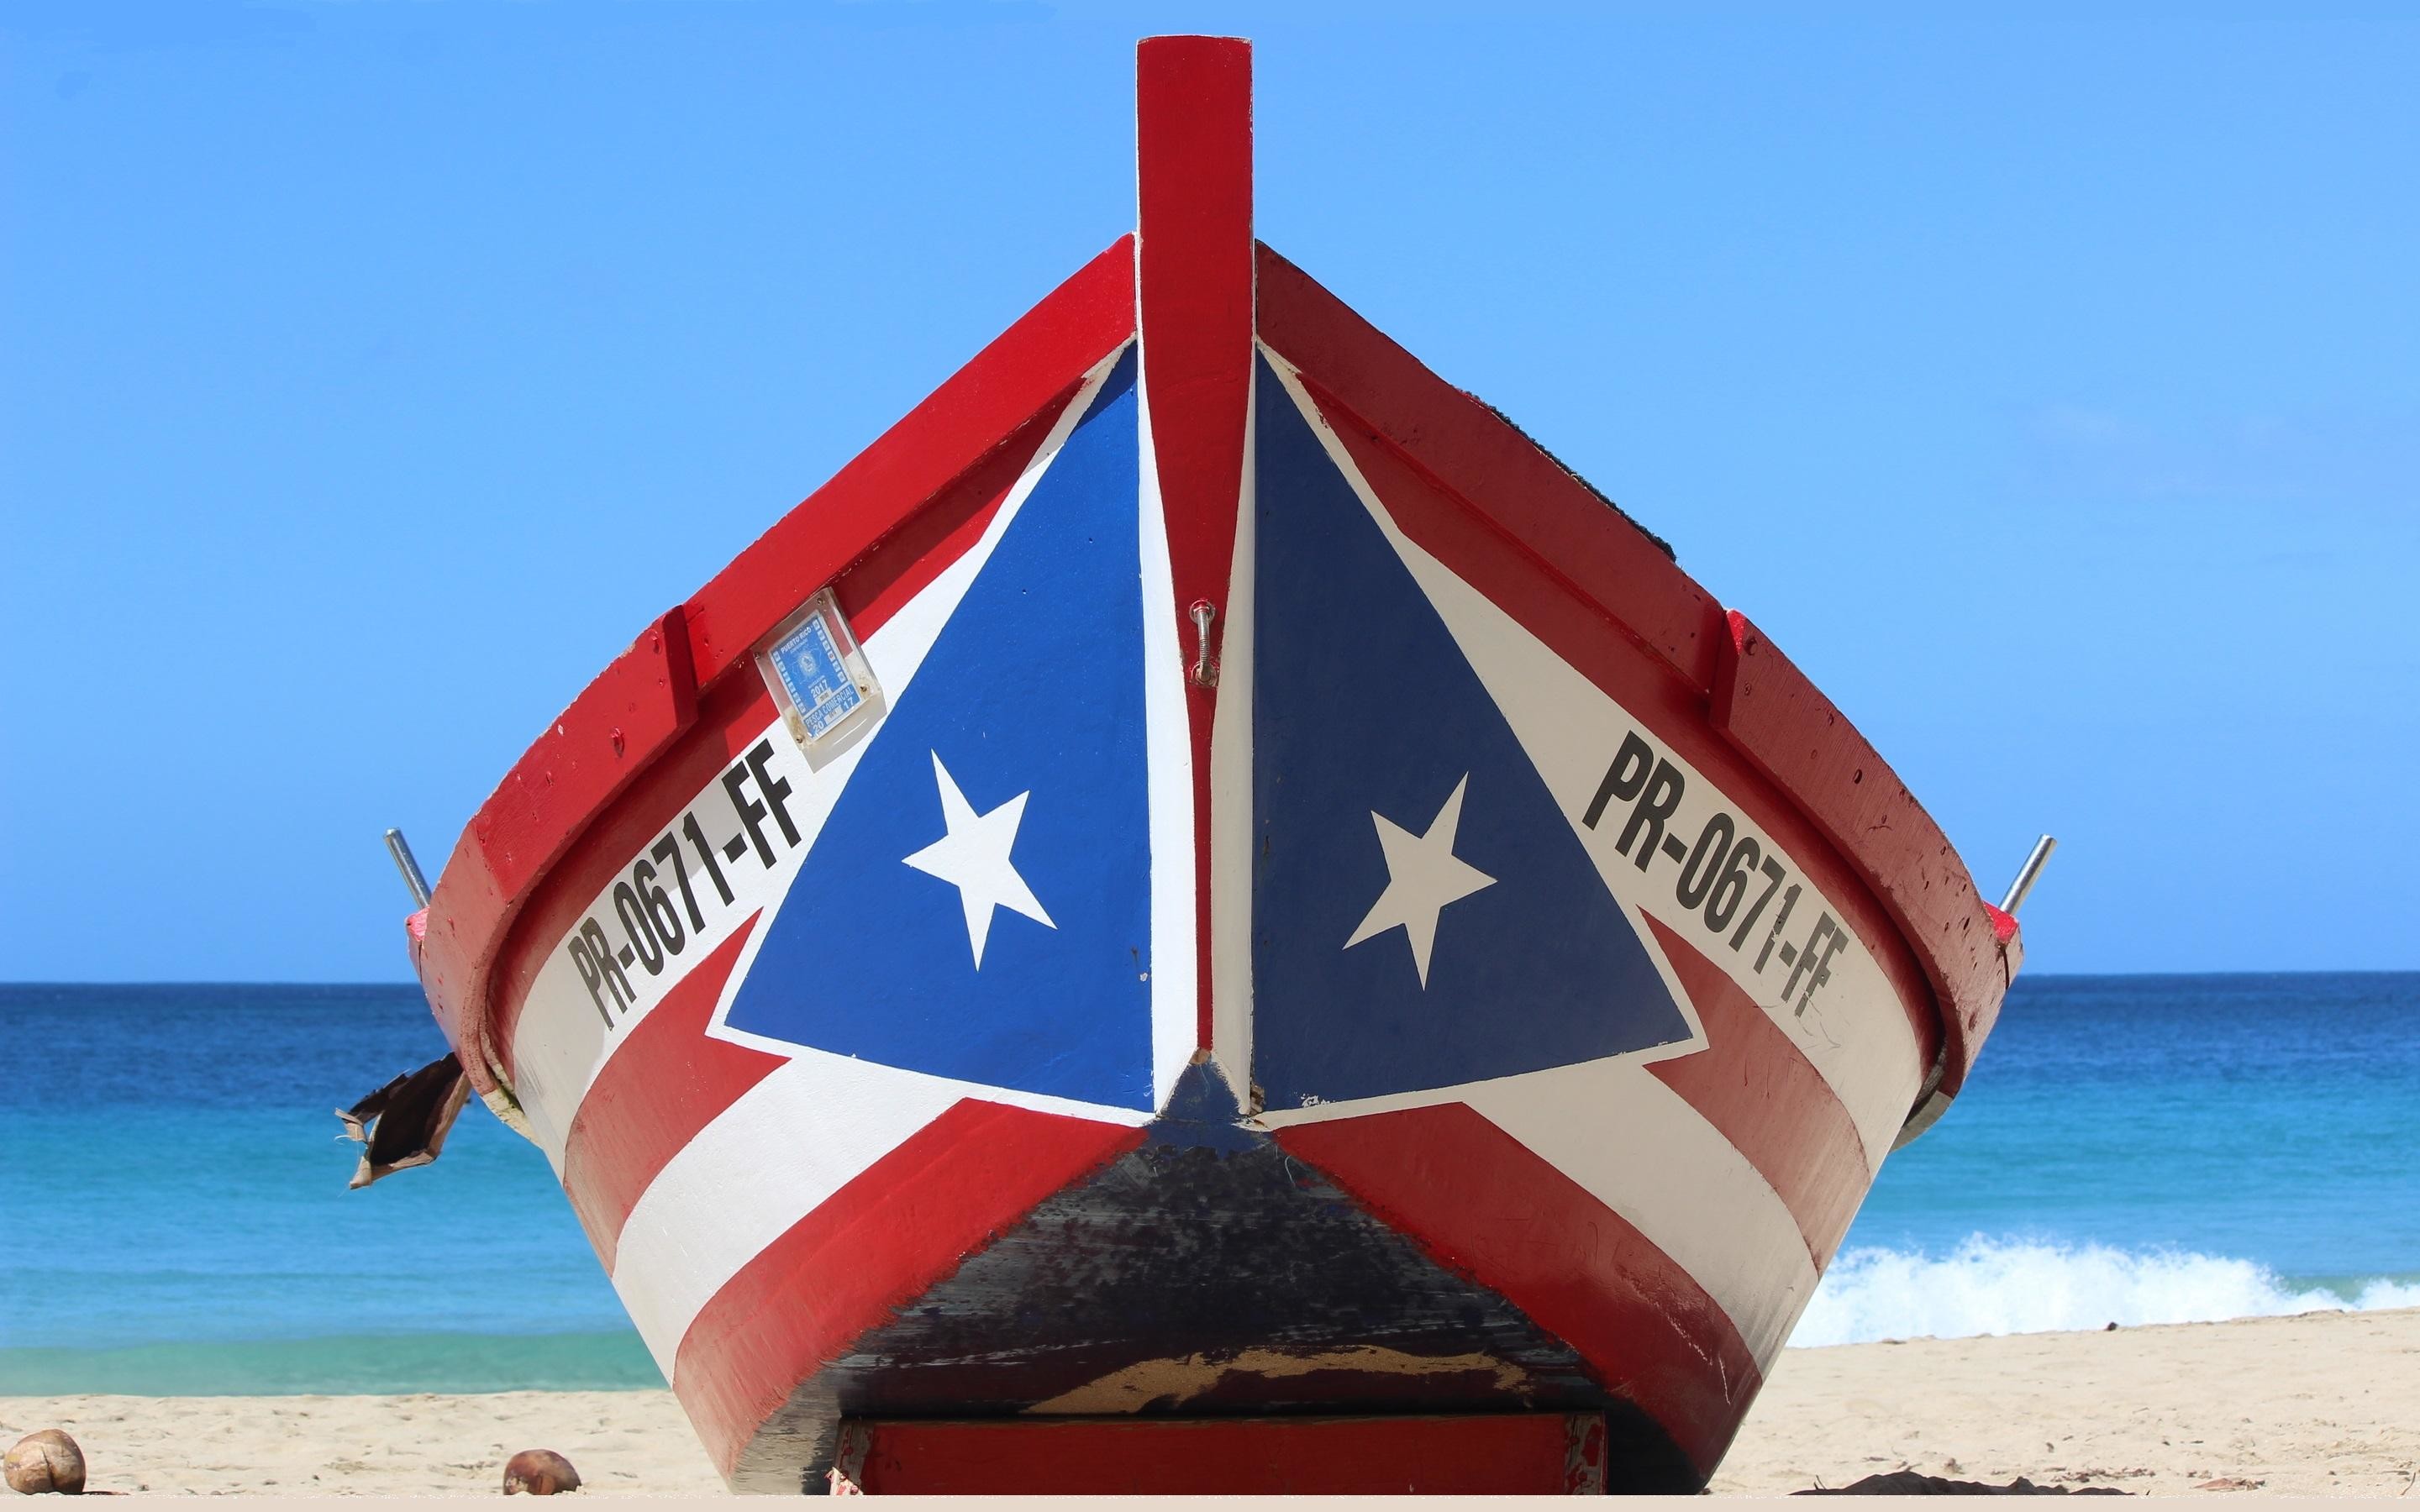 Puerto rican rough fan image